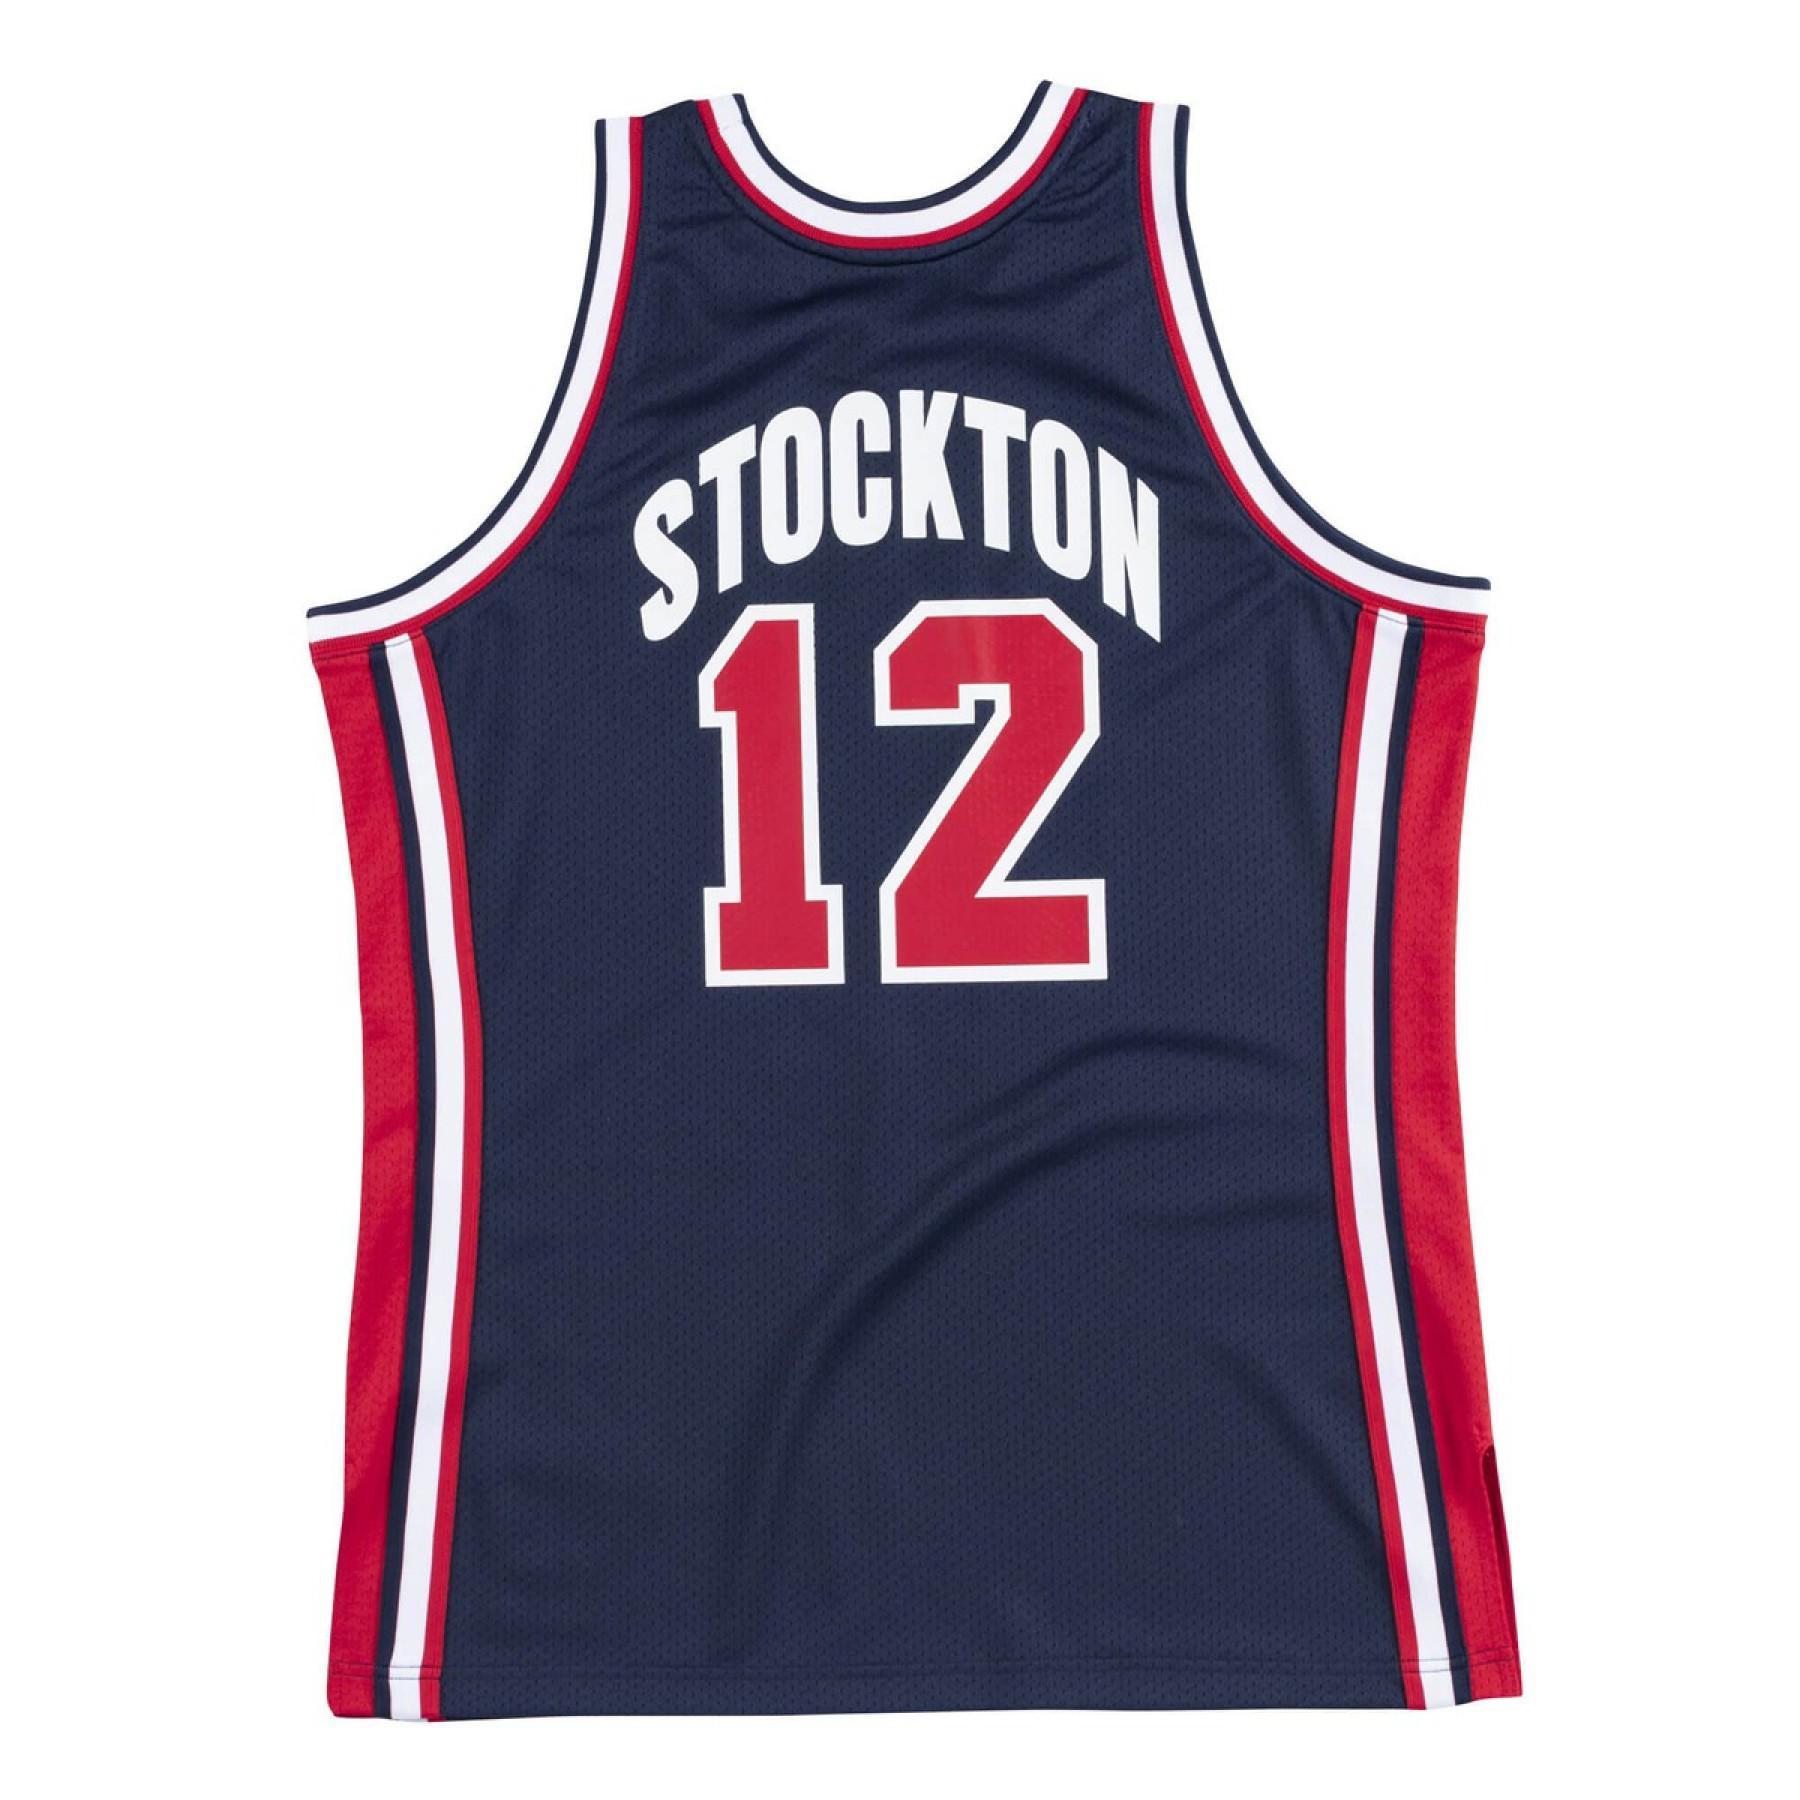 Authentic team jersey USA nba John Stockton